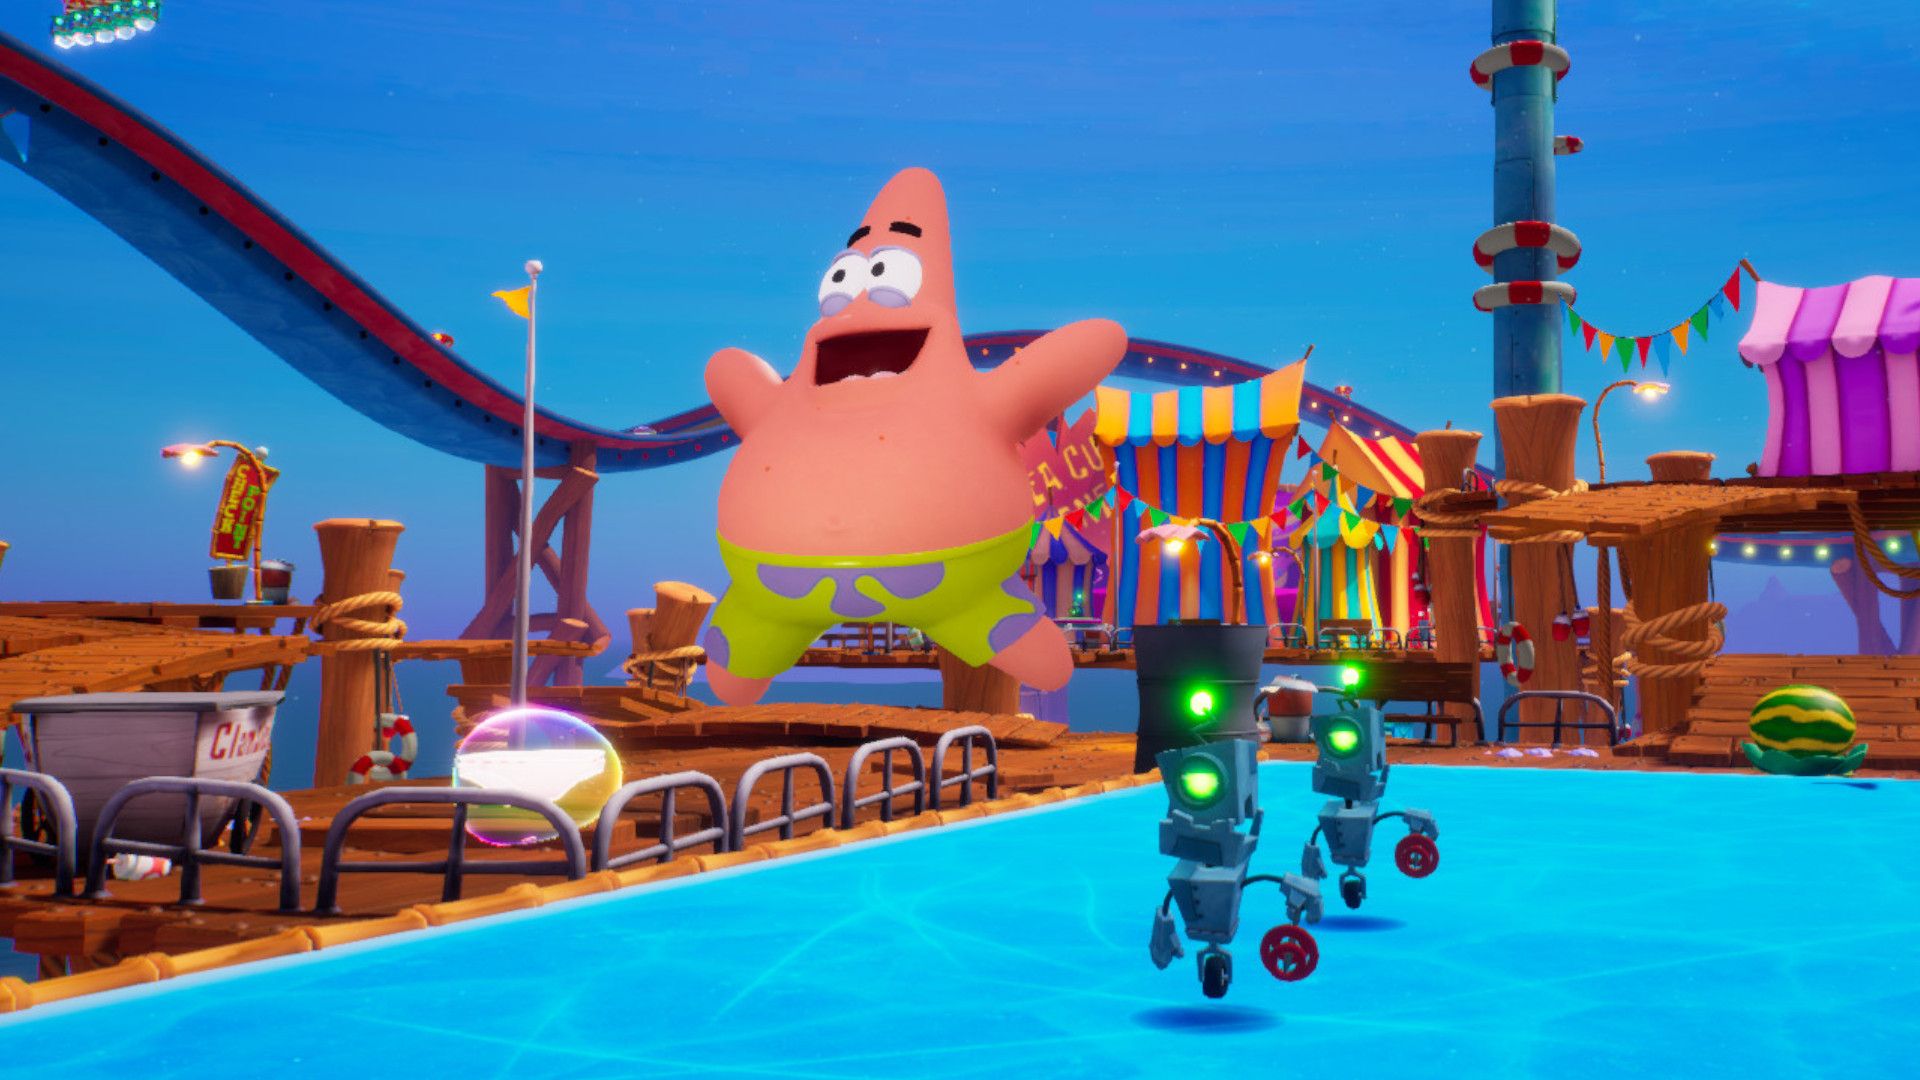 SpongeBob SquarePants: Battle for Bikini Bottom hits Steam in June